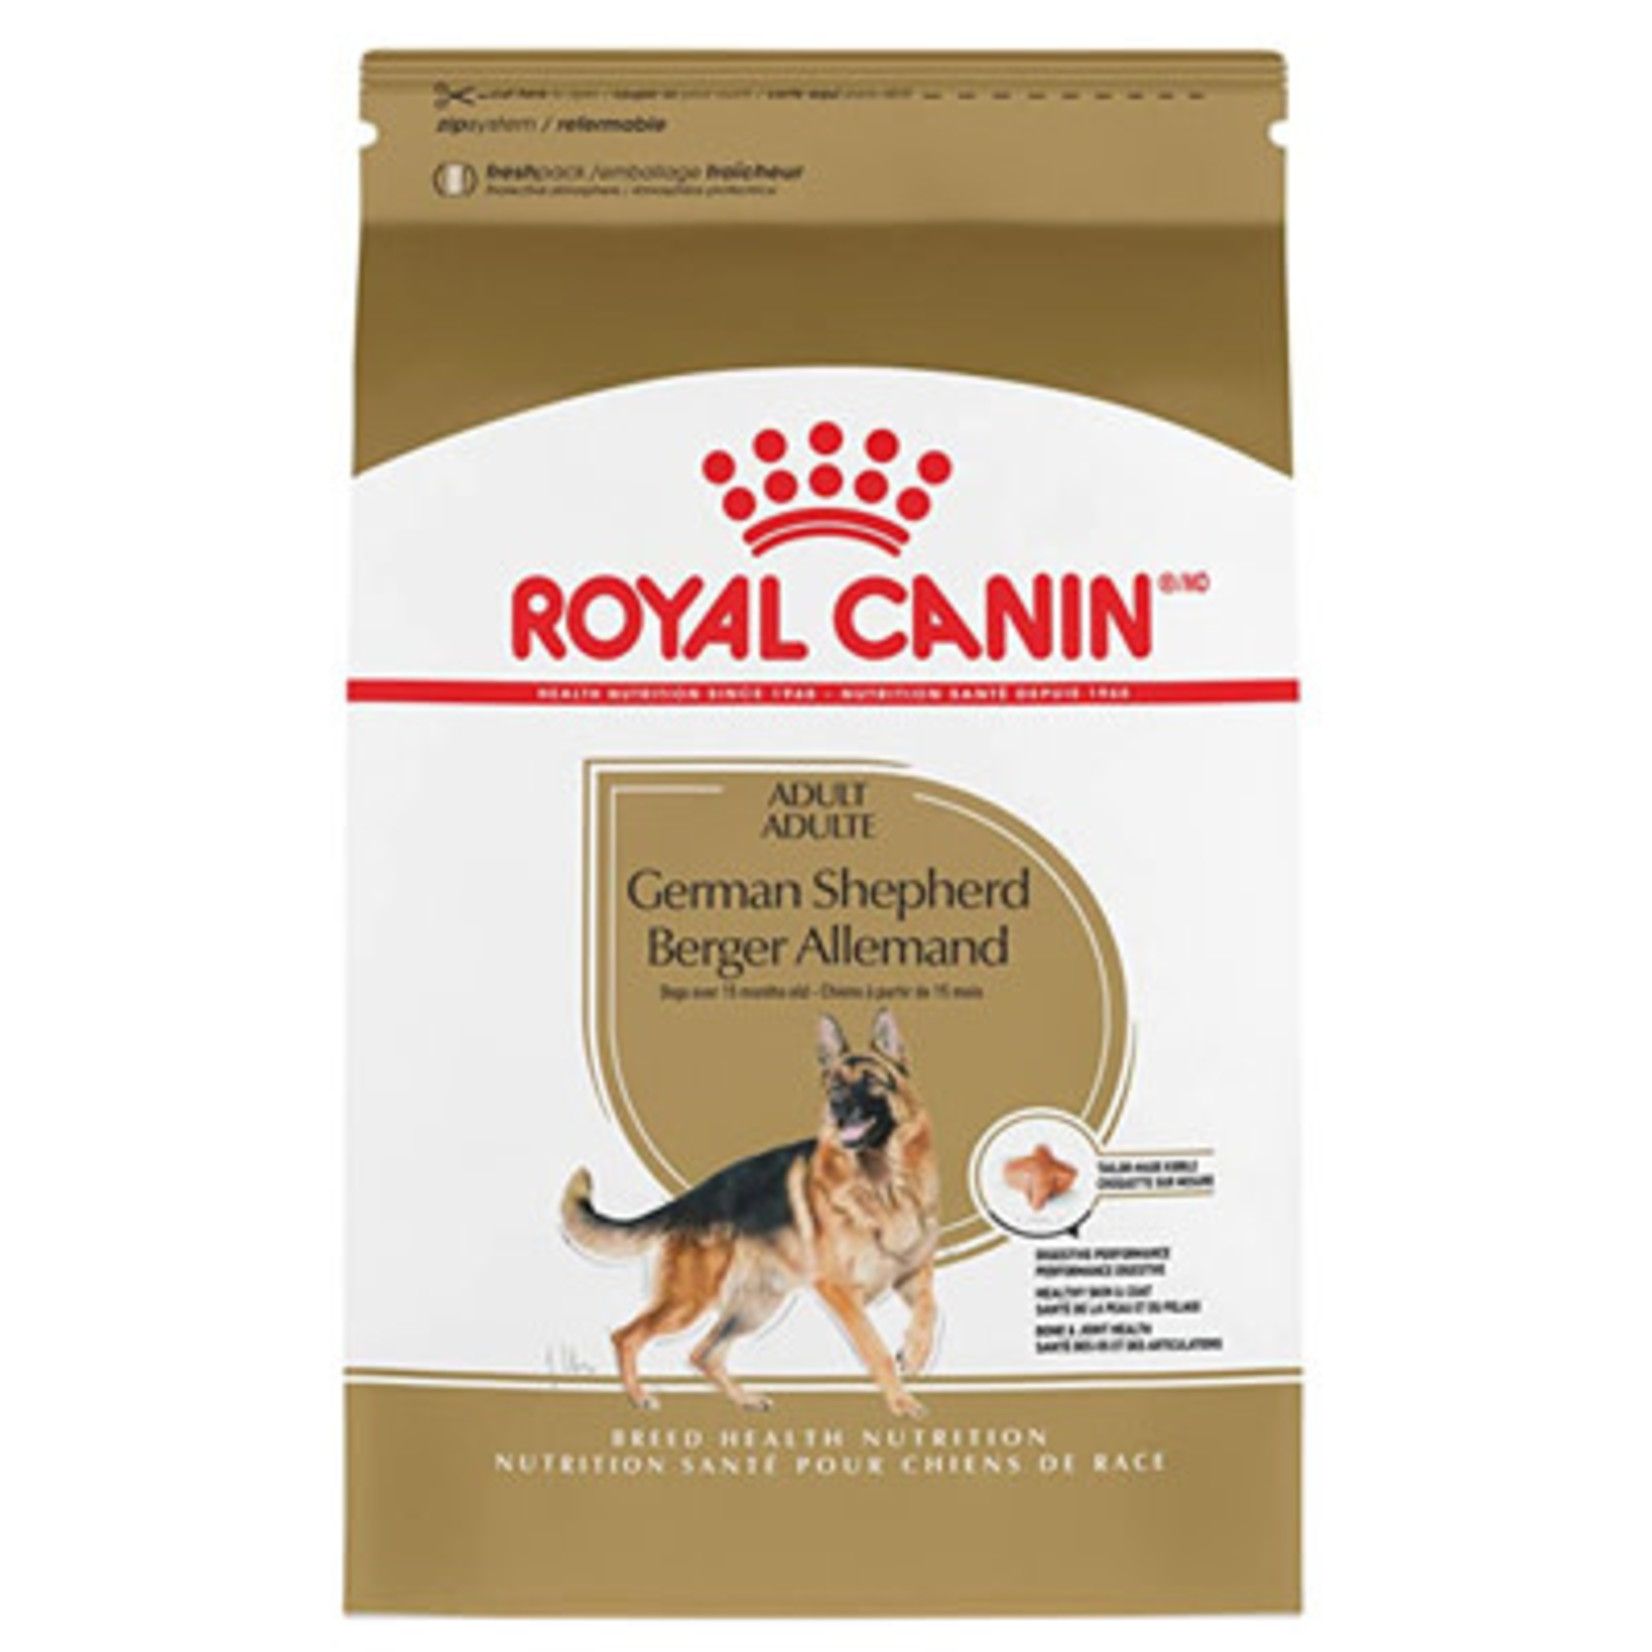 Royal Canin German Shepherd Dog 30# Royal Canin